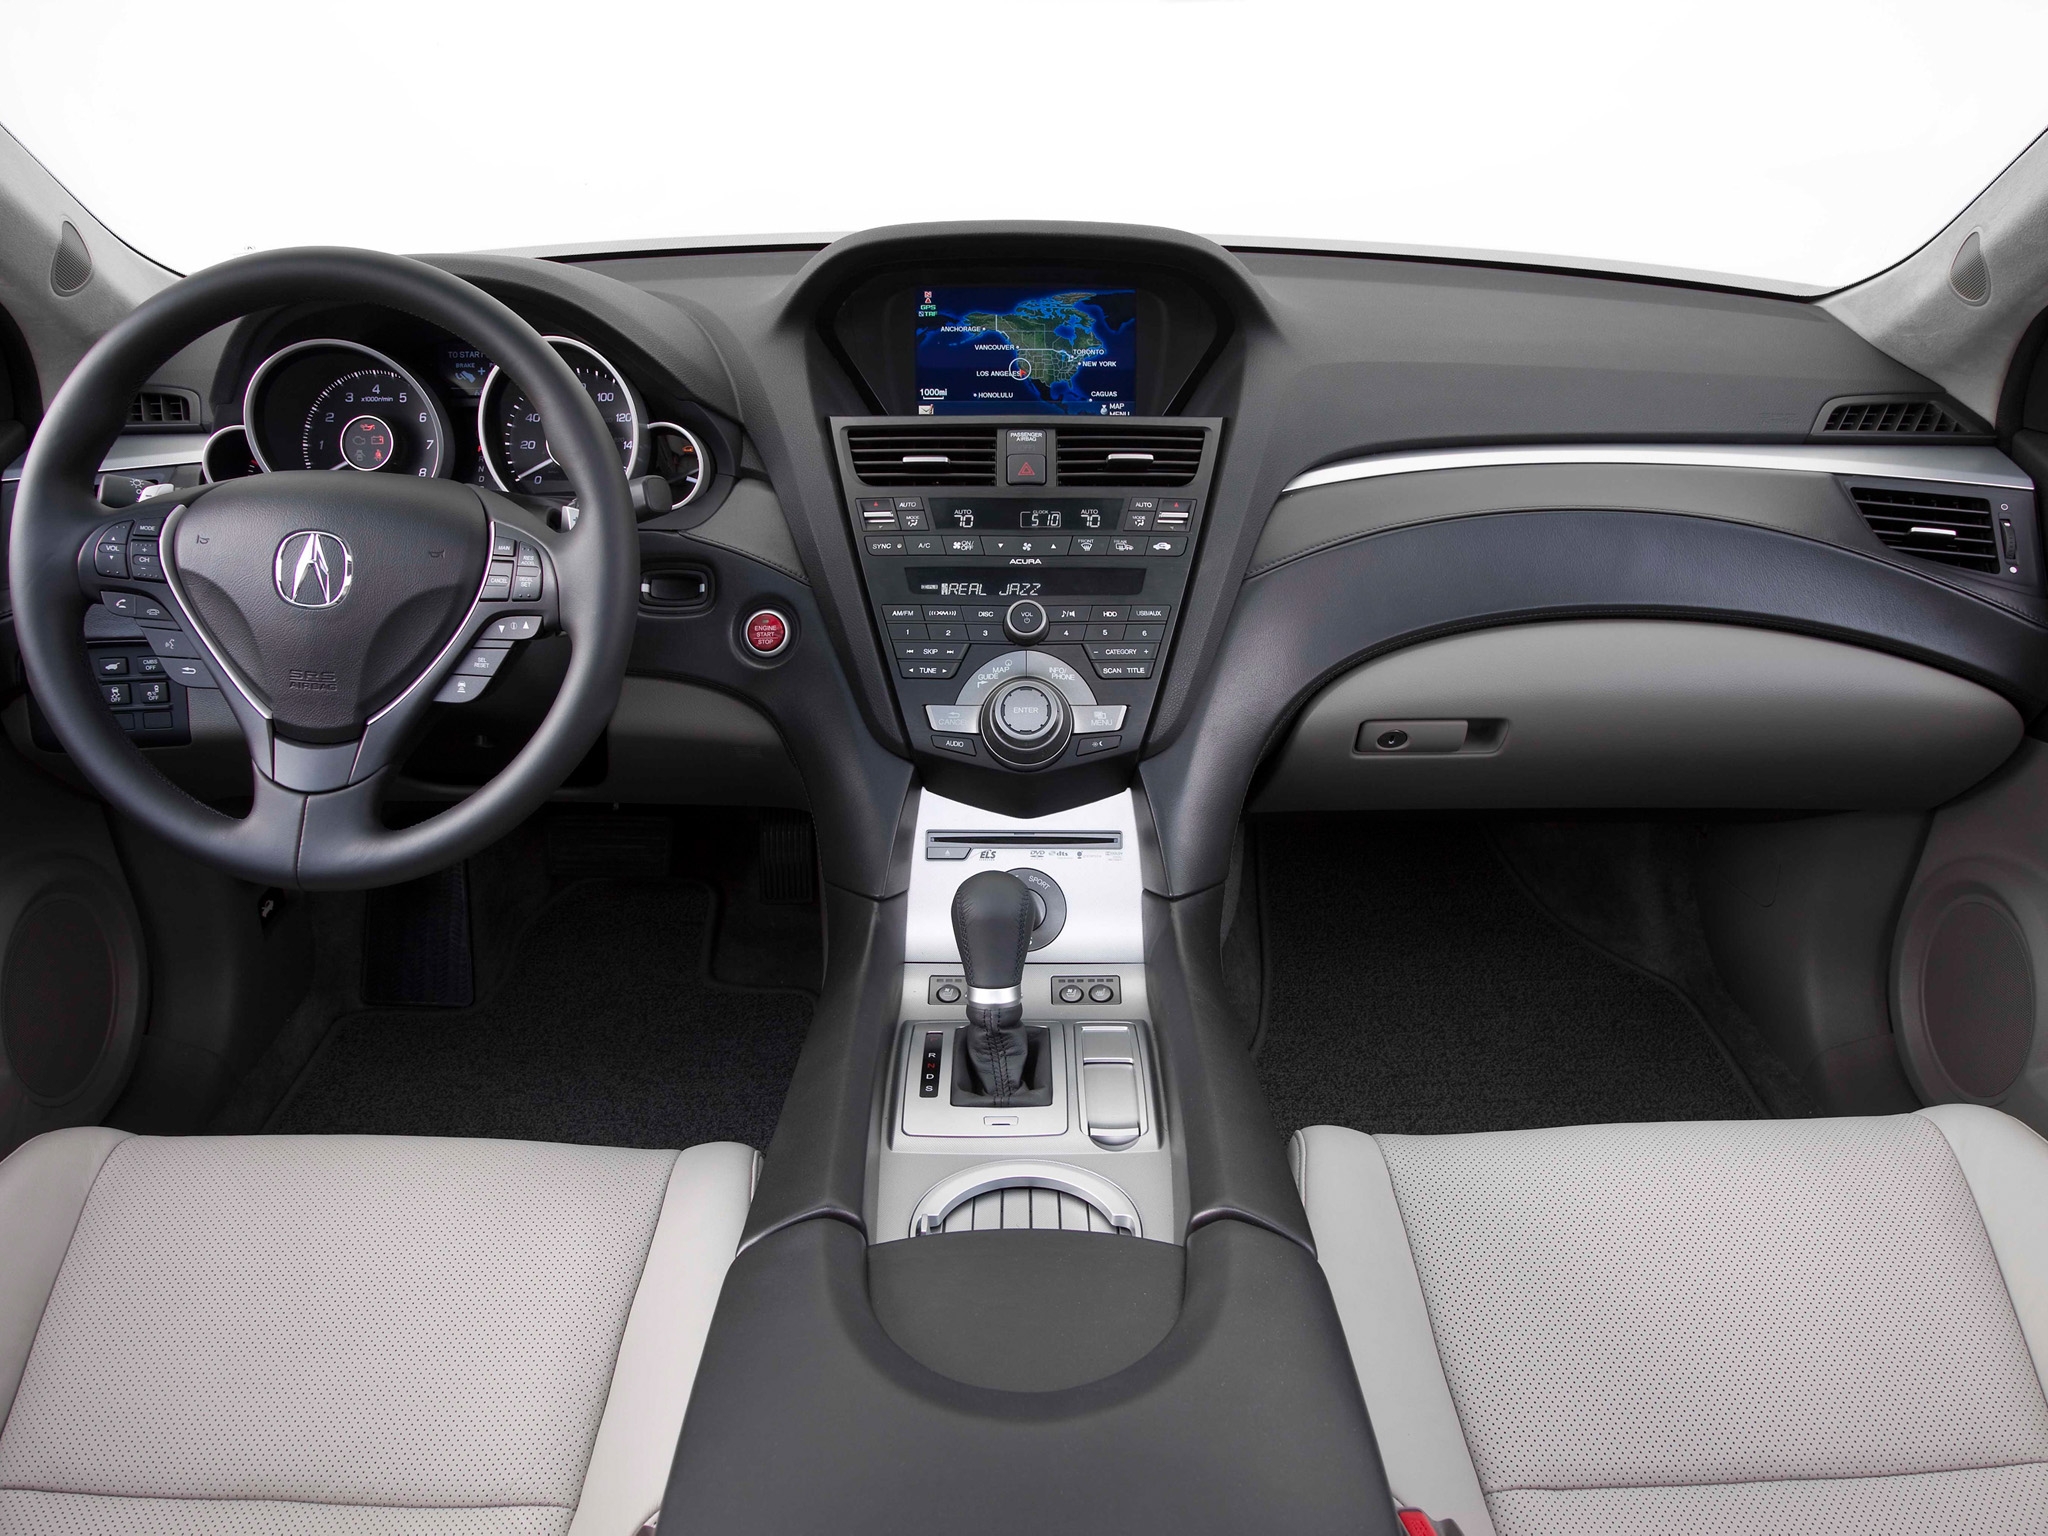 acura, interior, cars, steering wheel, rudder, salon, speedometer, zdx, 2009